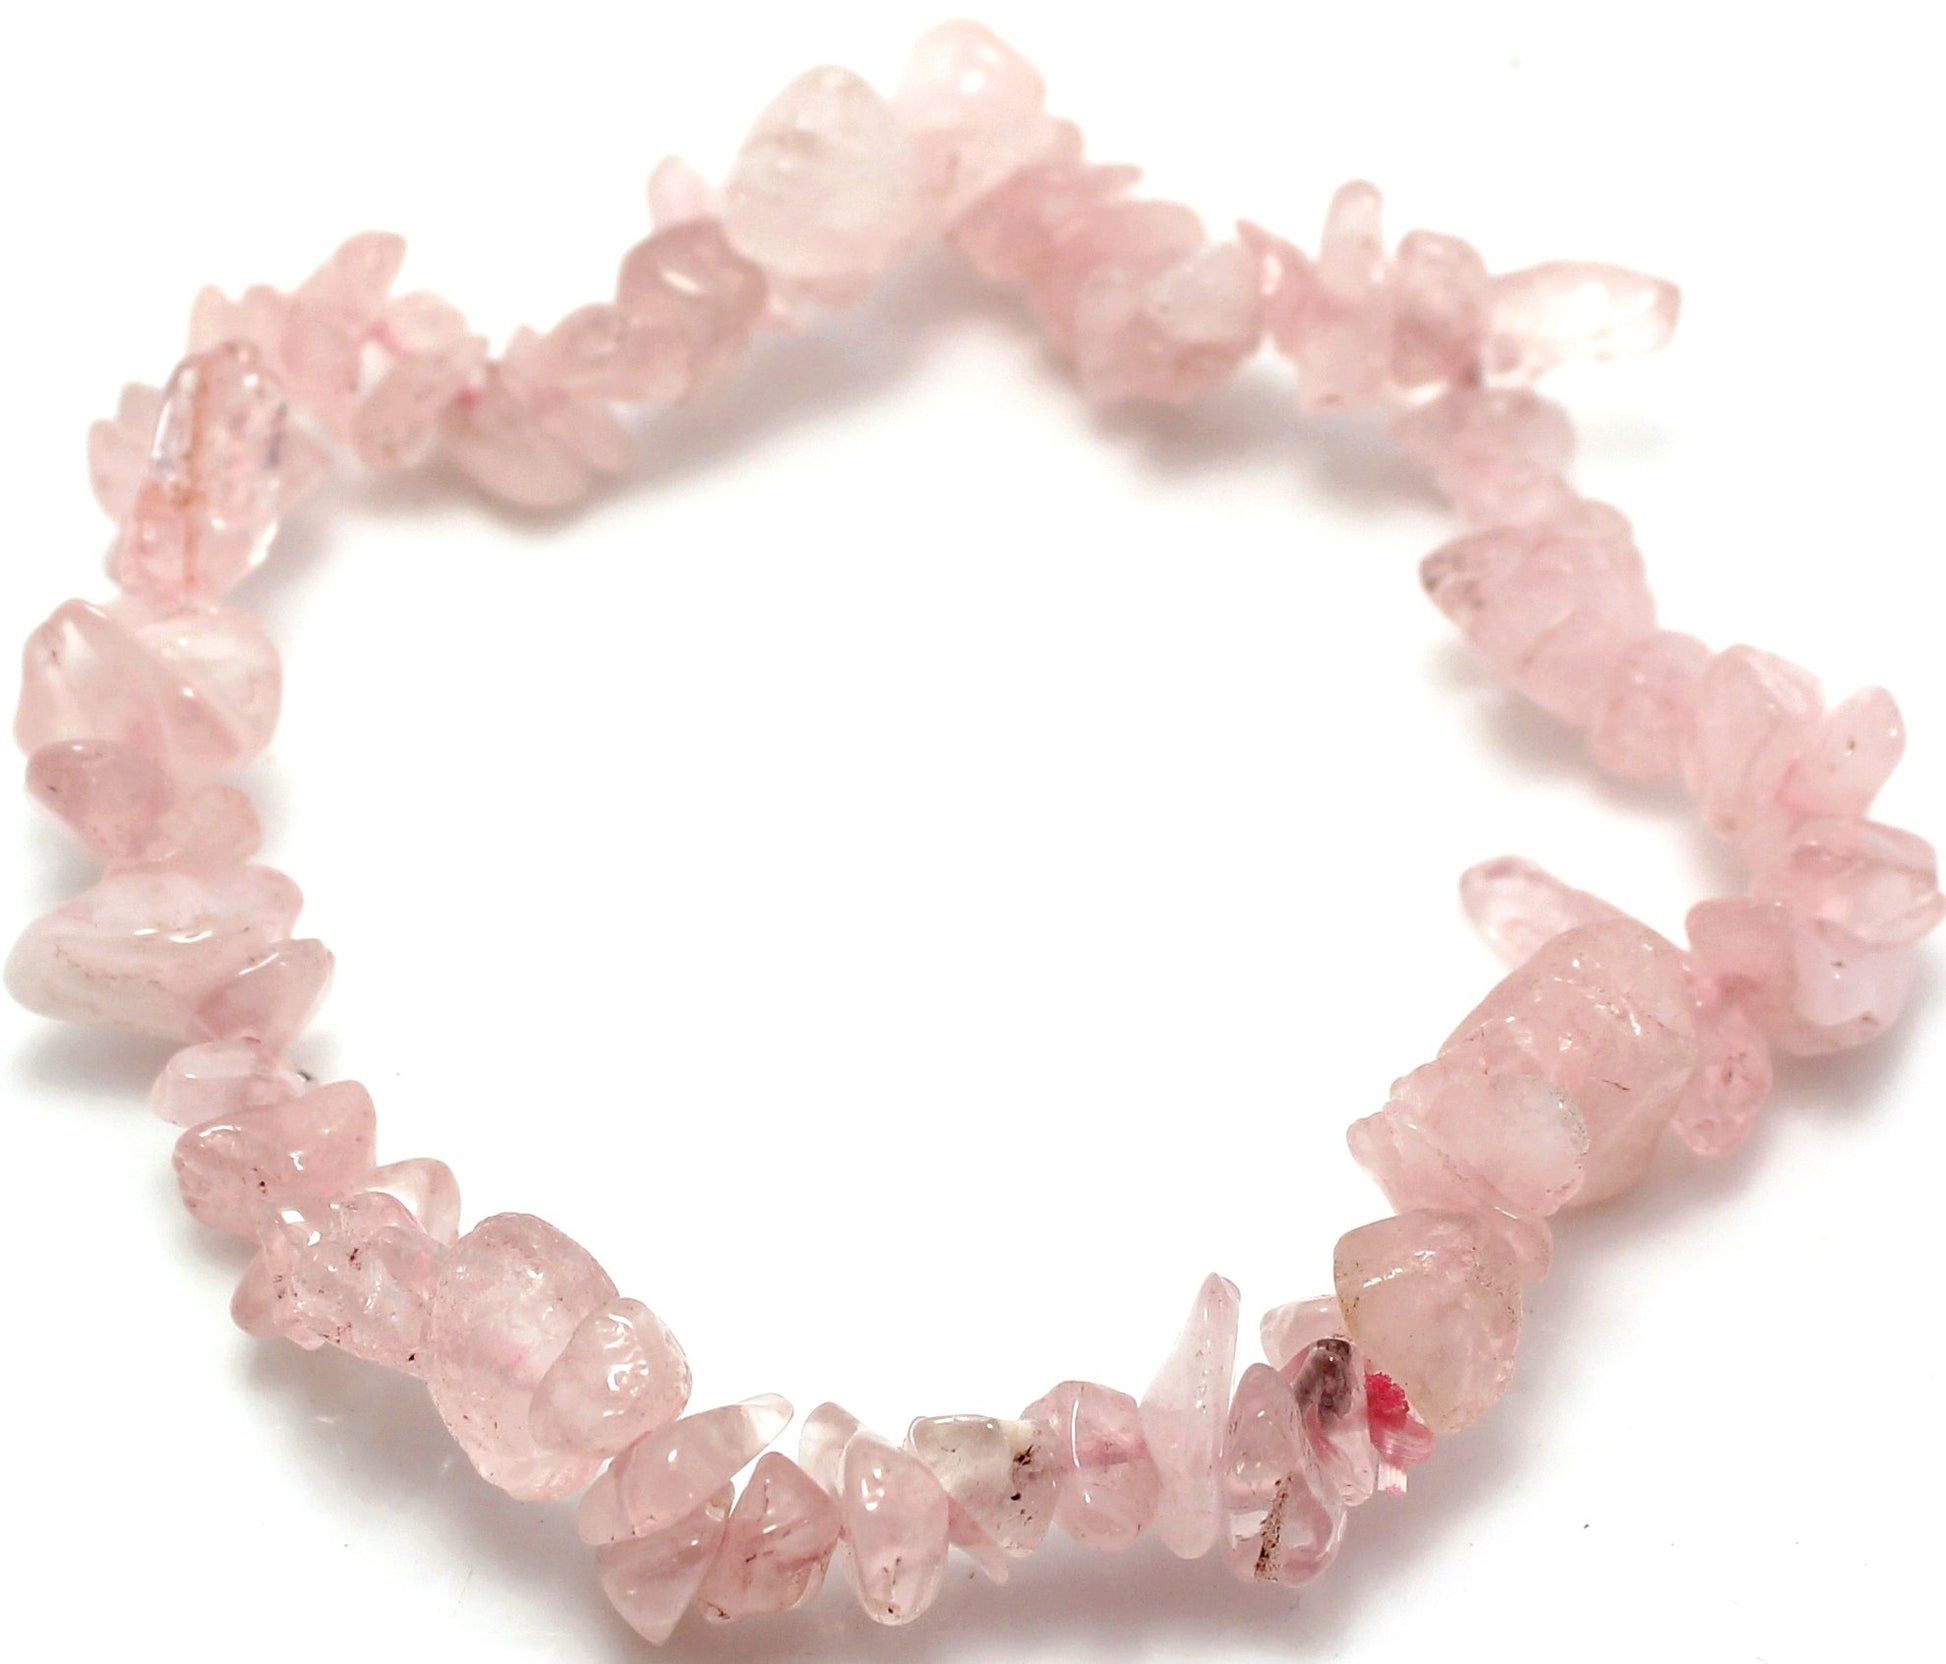 Rose quartz zodiac bracelet - Rivendell Shop